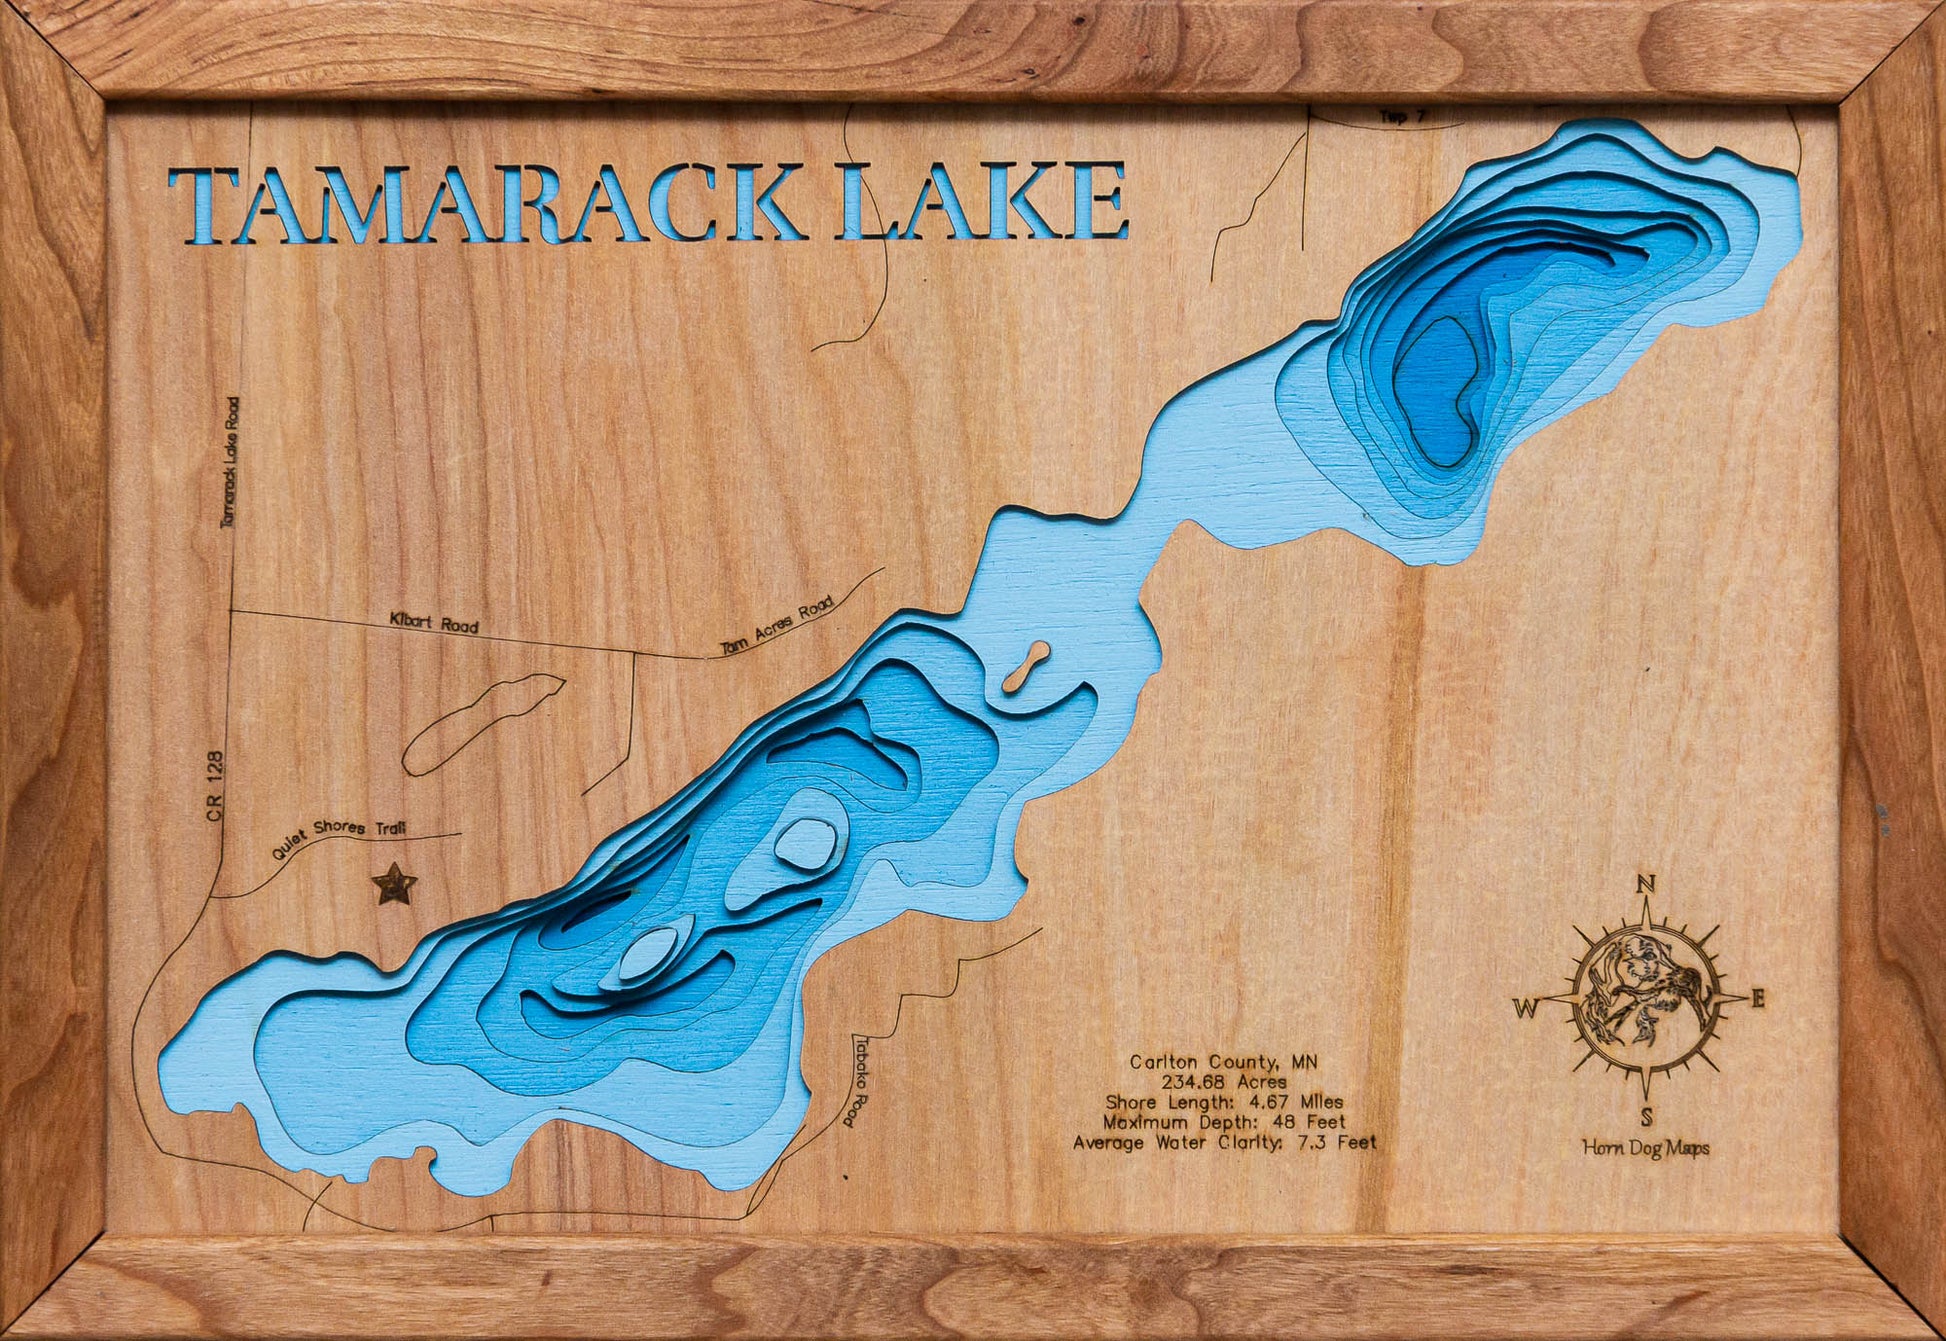 Tamarack Lake in Carlton County, MN